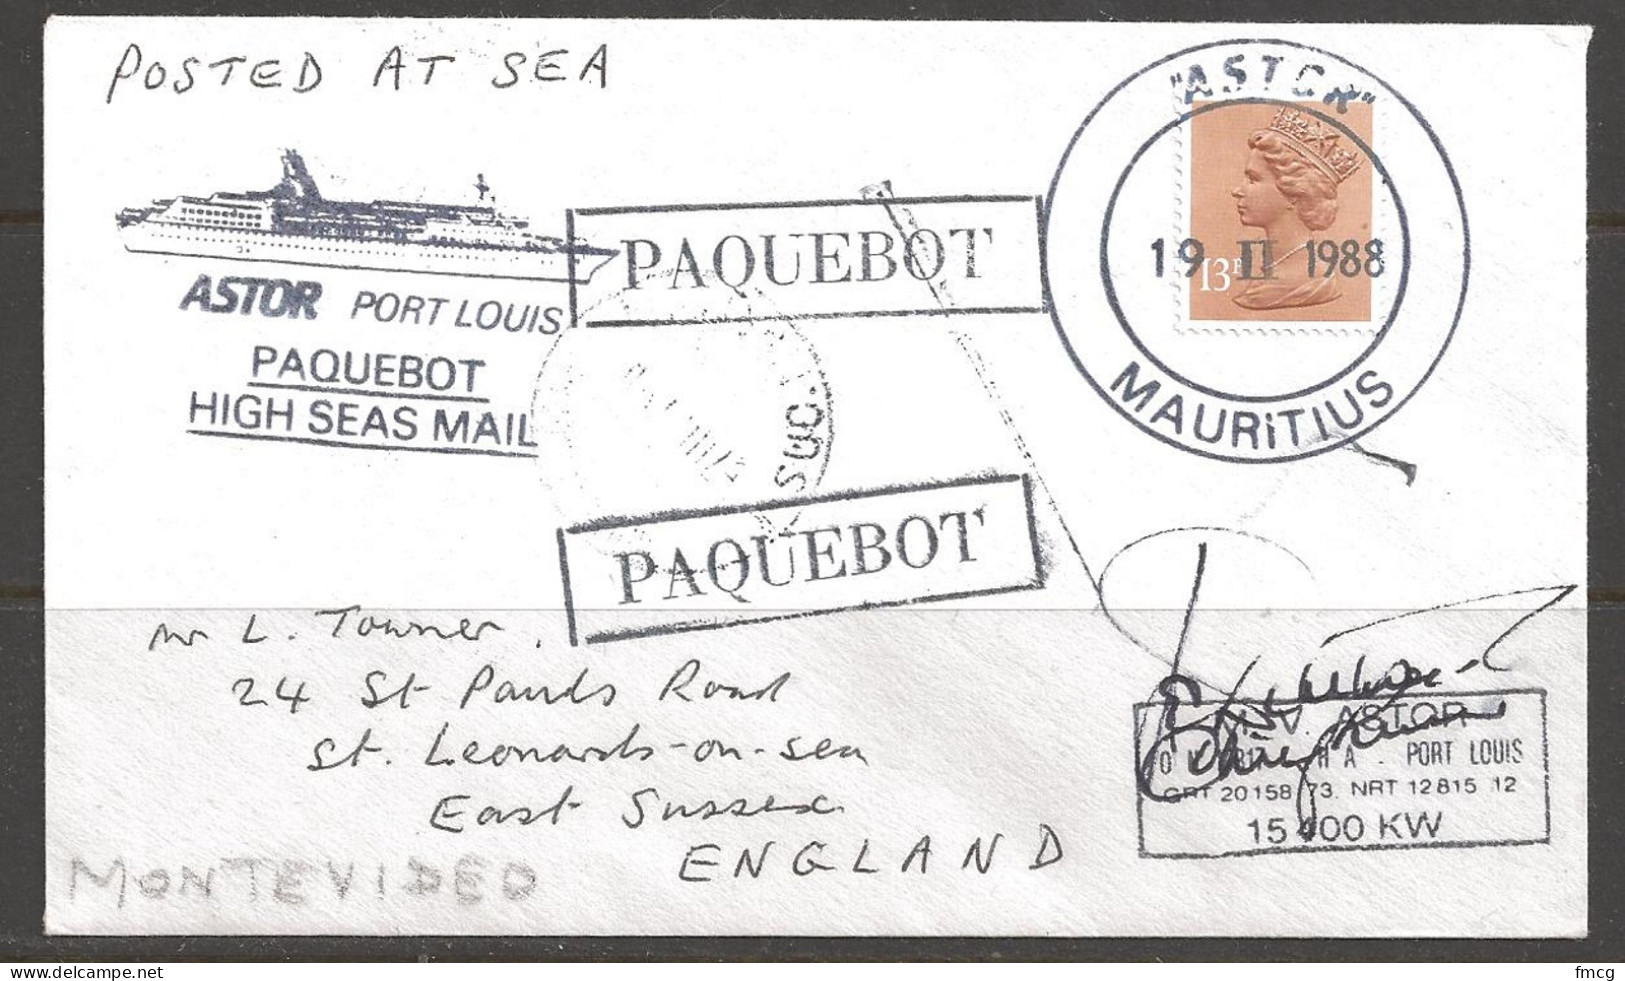 1988 Paquebot Cover, British Stamp Used In Montevideo, Uruguay (19 II 1988) - Uruguay